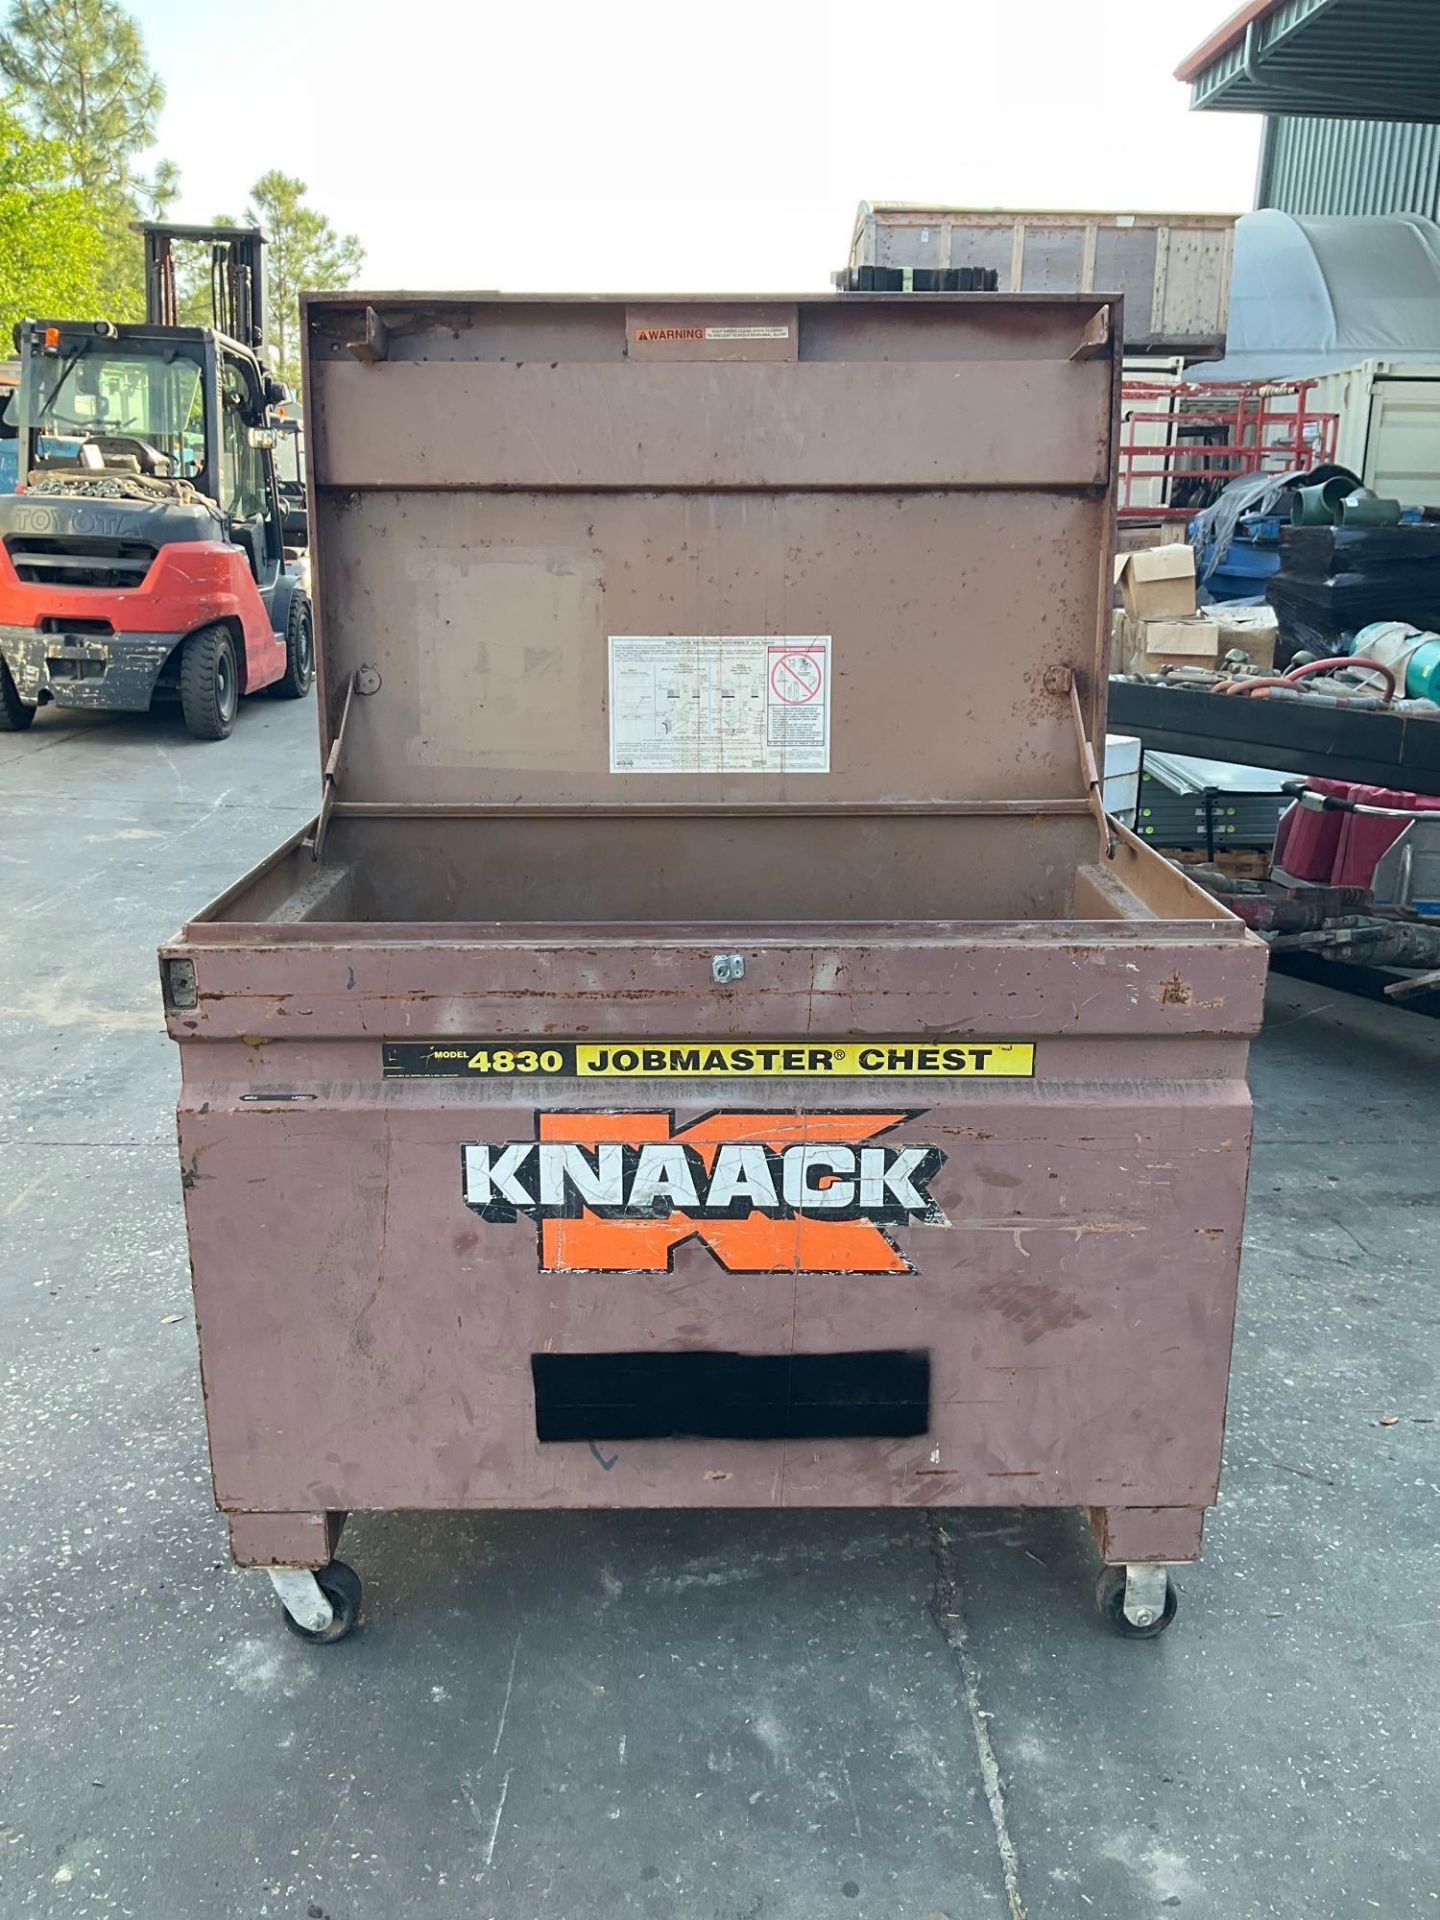 KNACK JOBMASTER CHEST INDUSTRIAL TOOL BOX ON WHEELS MODEL 4830 - Image 6 of 6